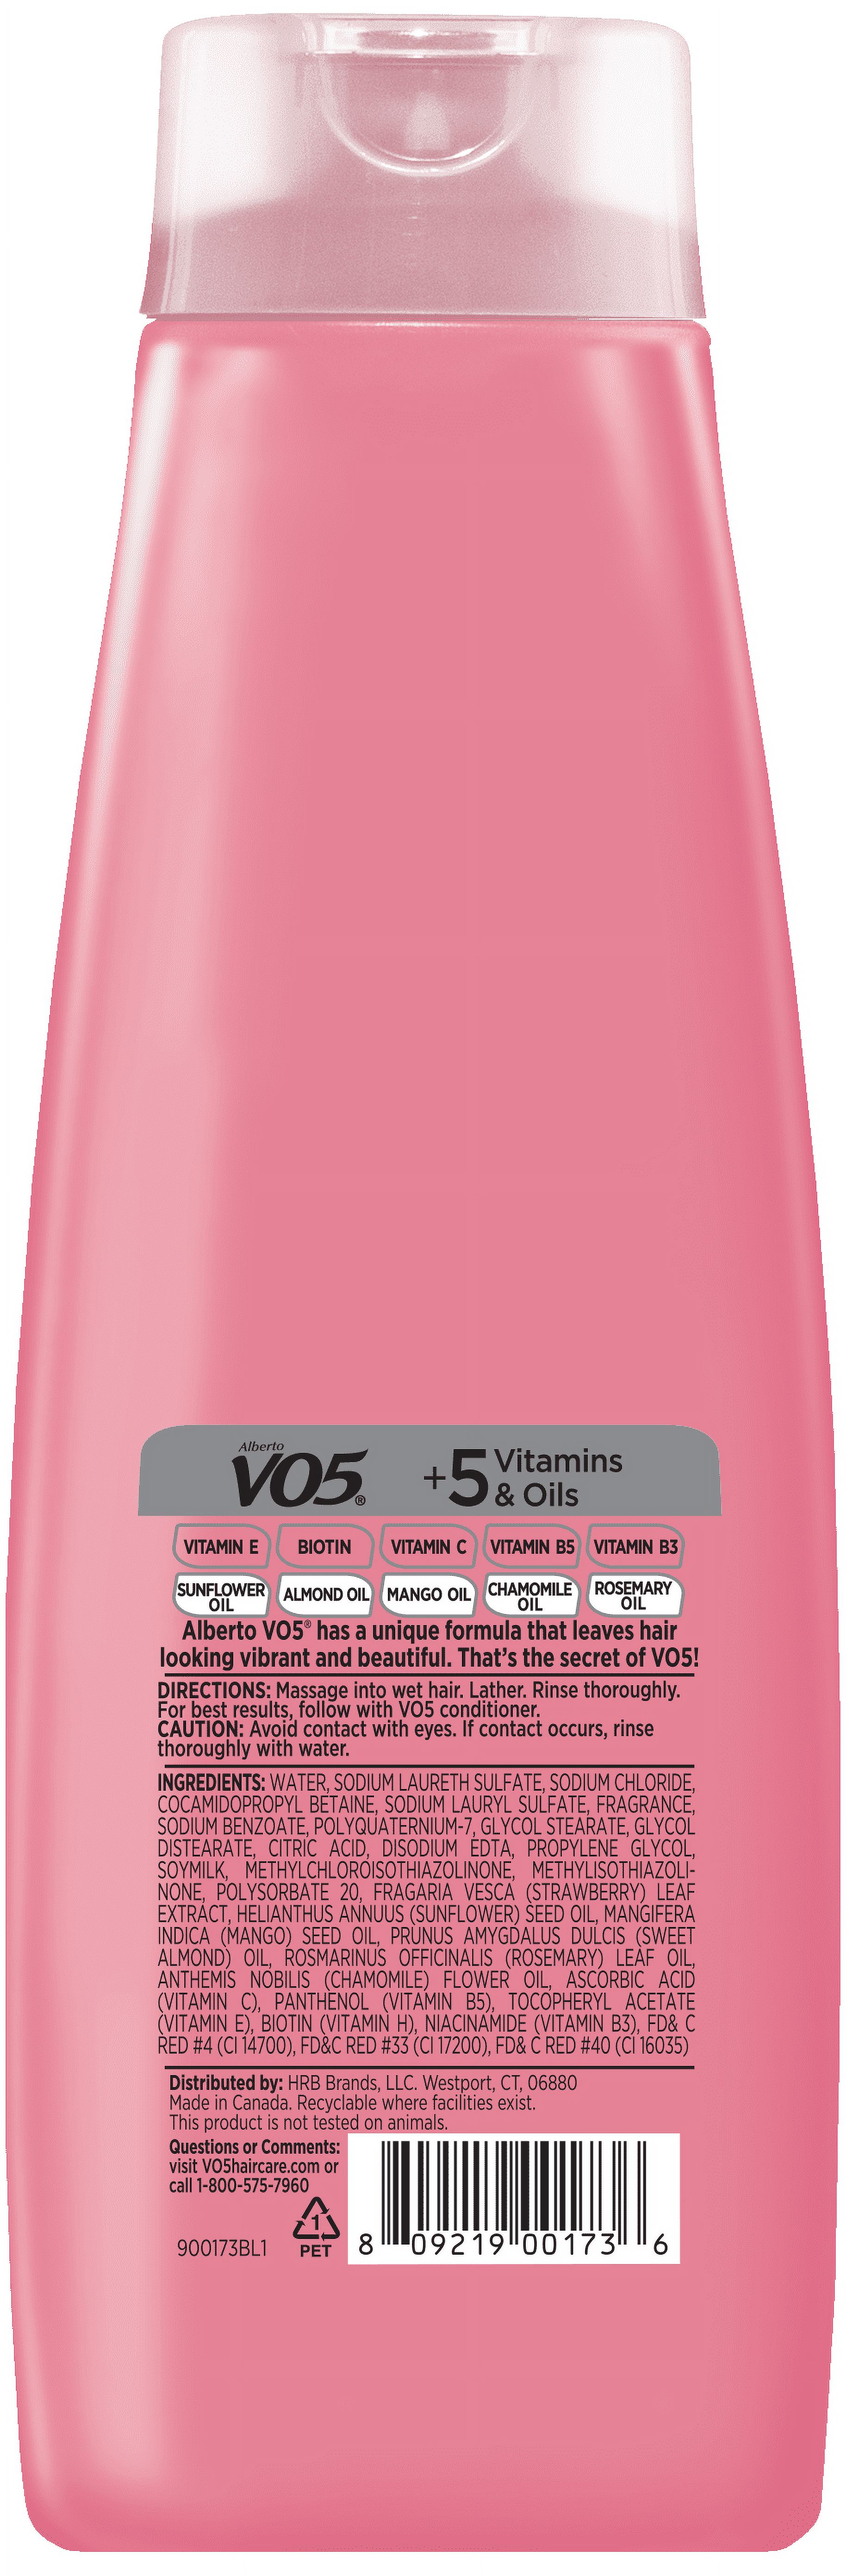 Alberto VO5 Strawberries & Cream Moisturizing Shampoo with Soy Milk, for All Hair Types, 16.9 fl oz - image 2 of 6